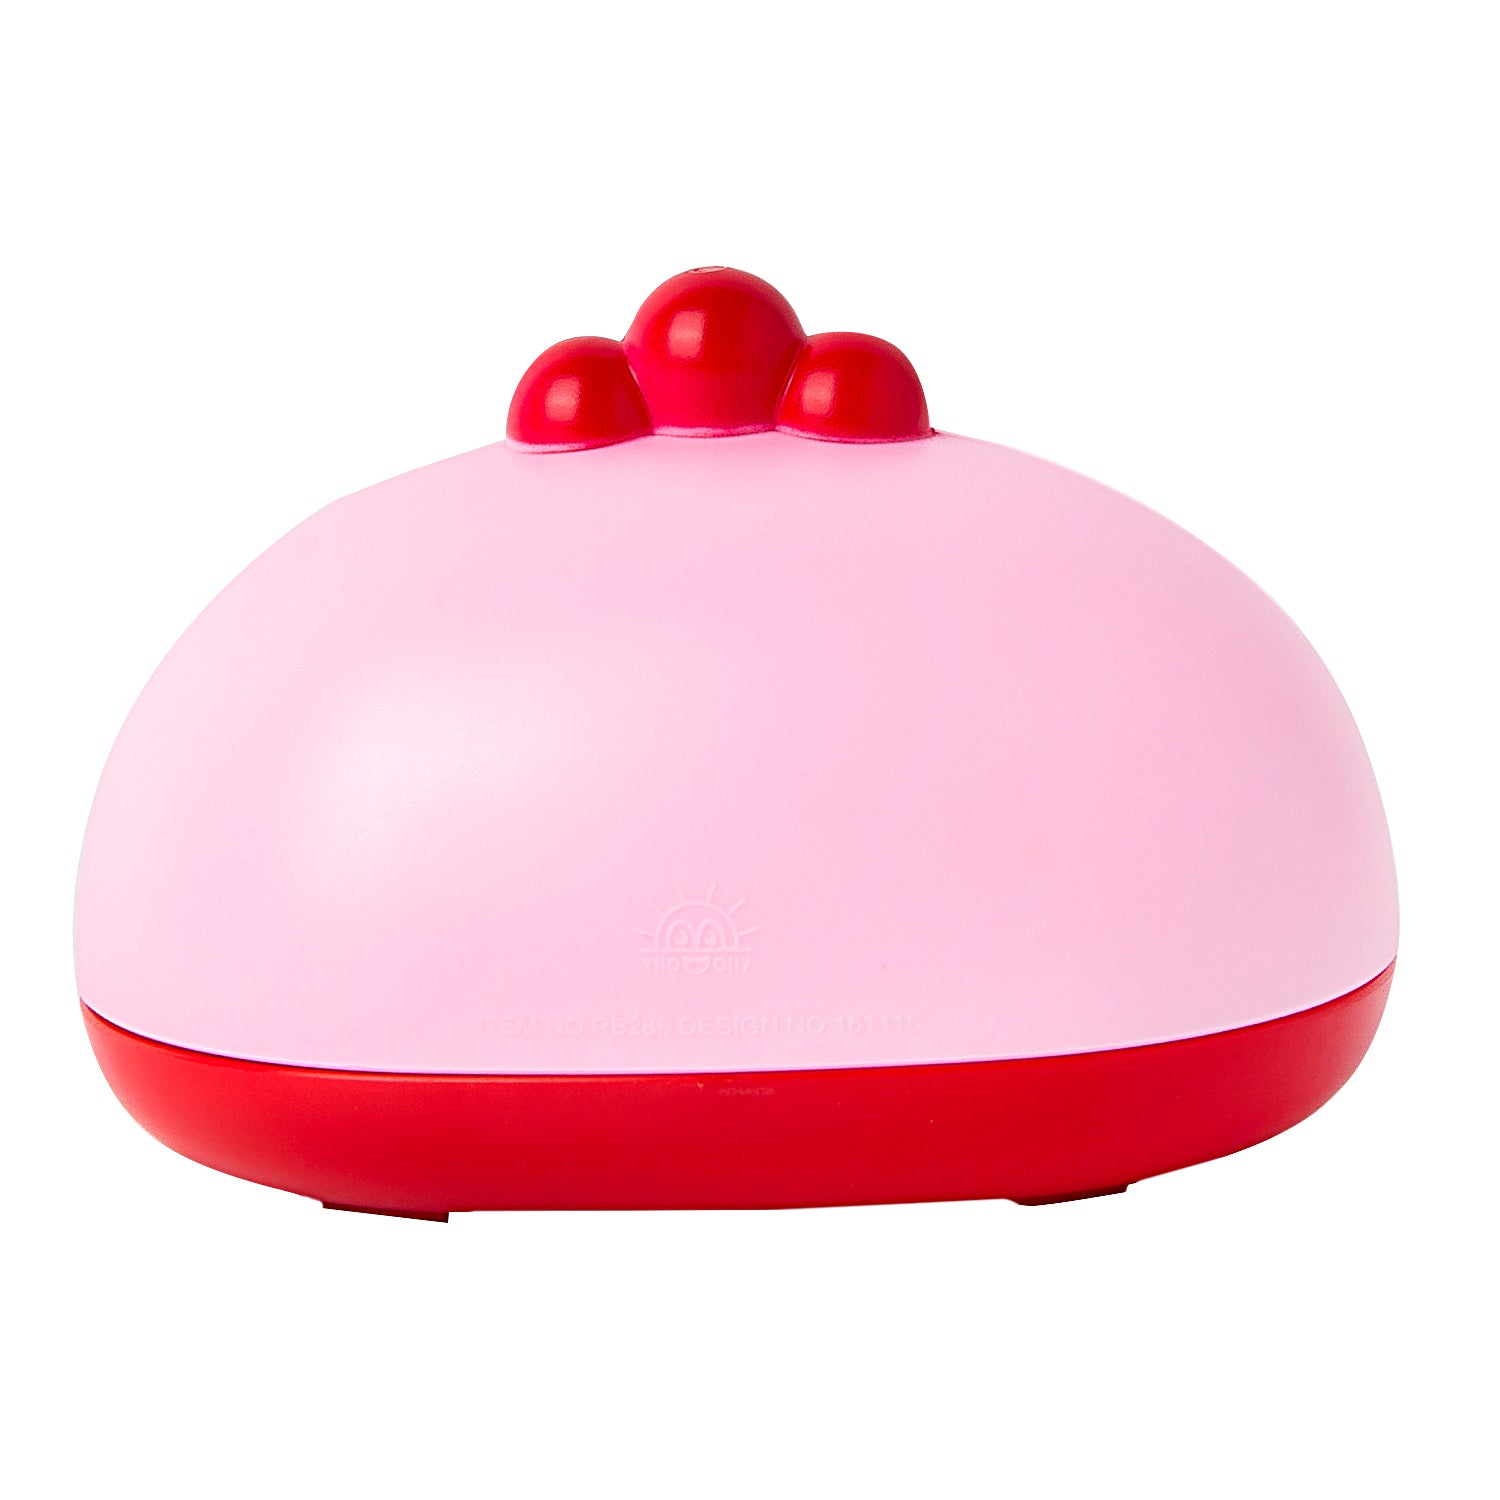 Chick Pink Soap Box - Baby Moo